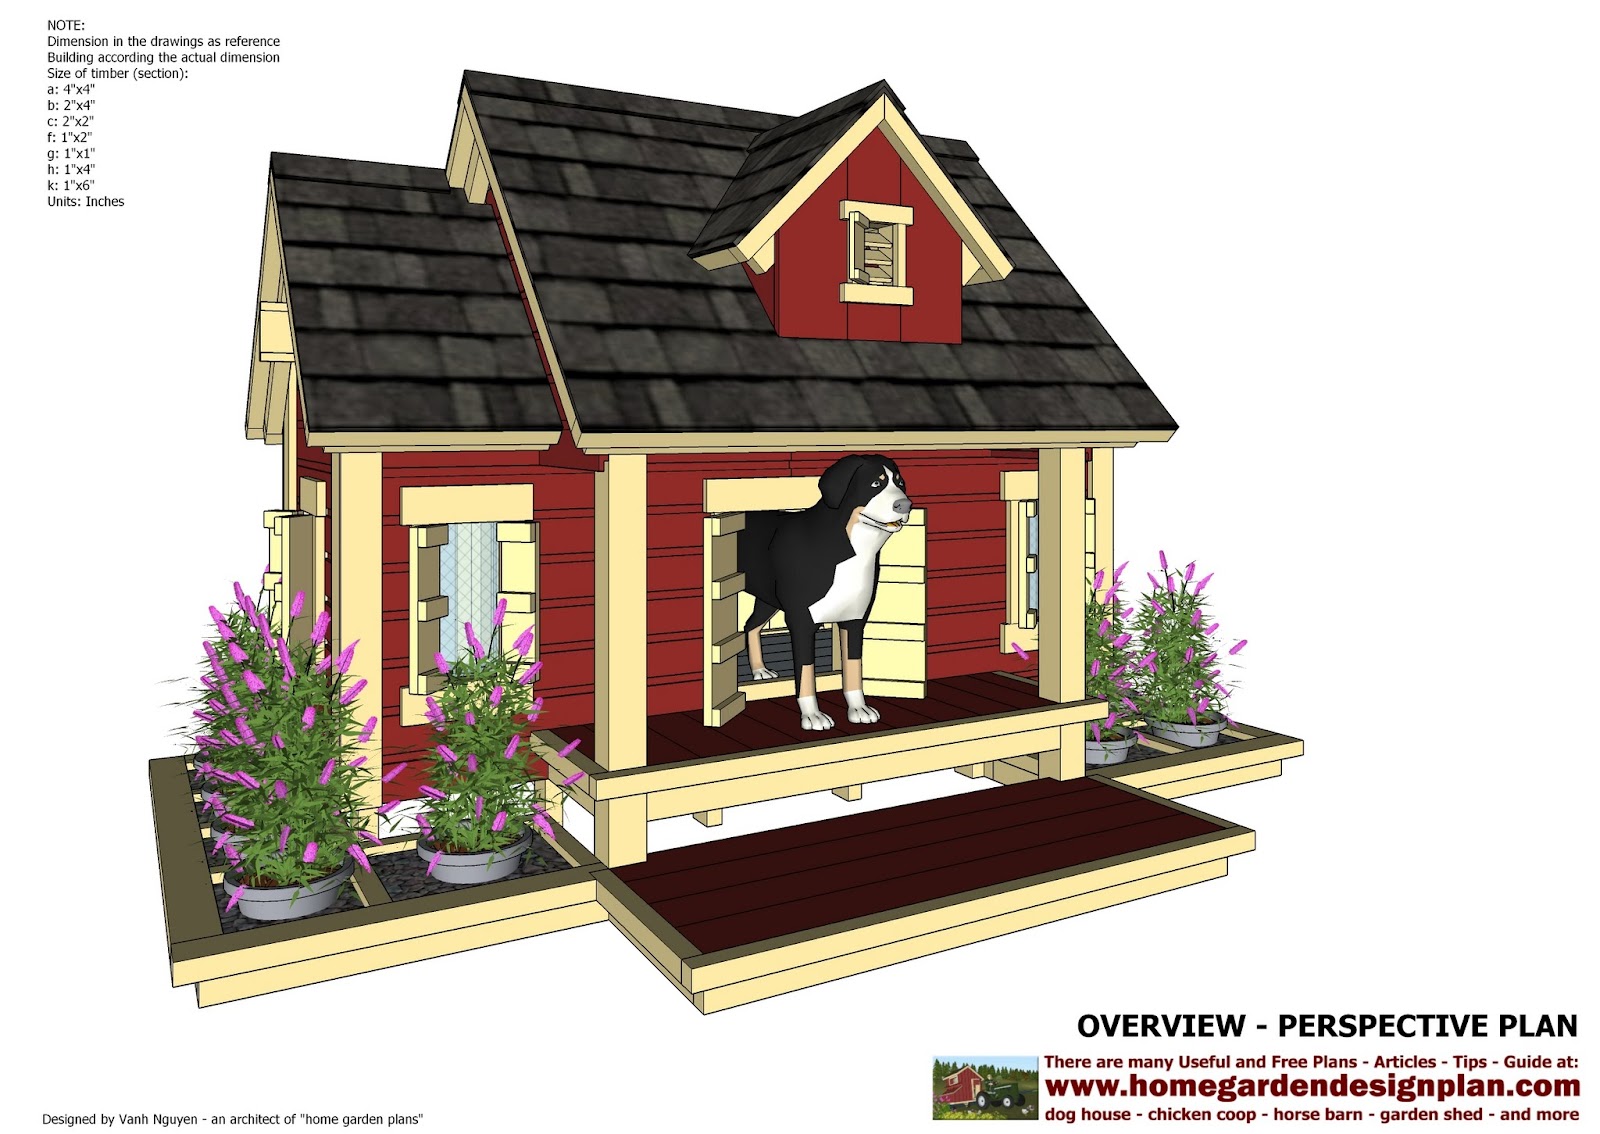 dog house ideas designs